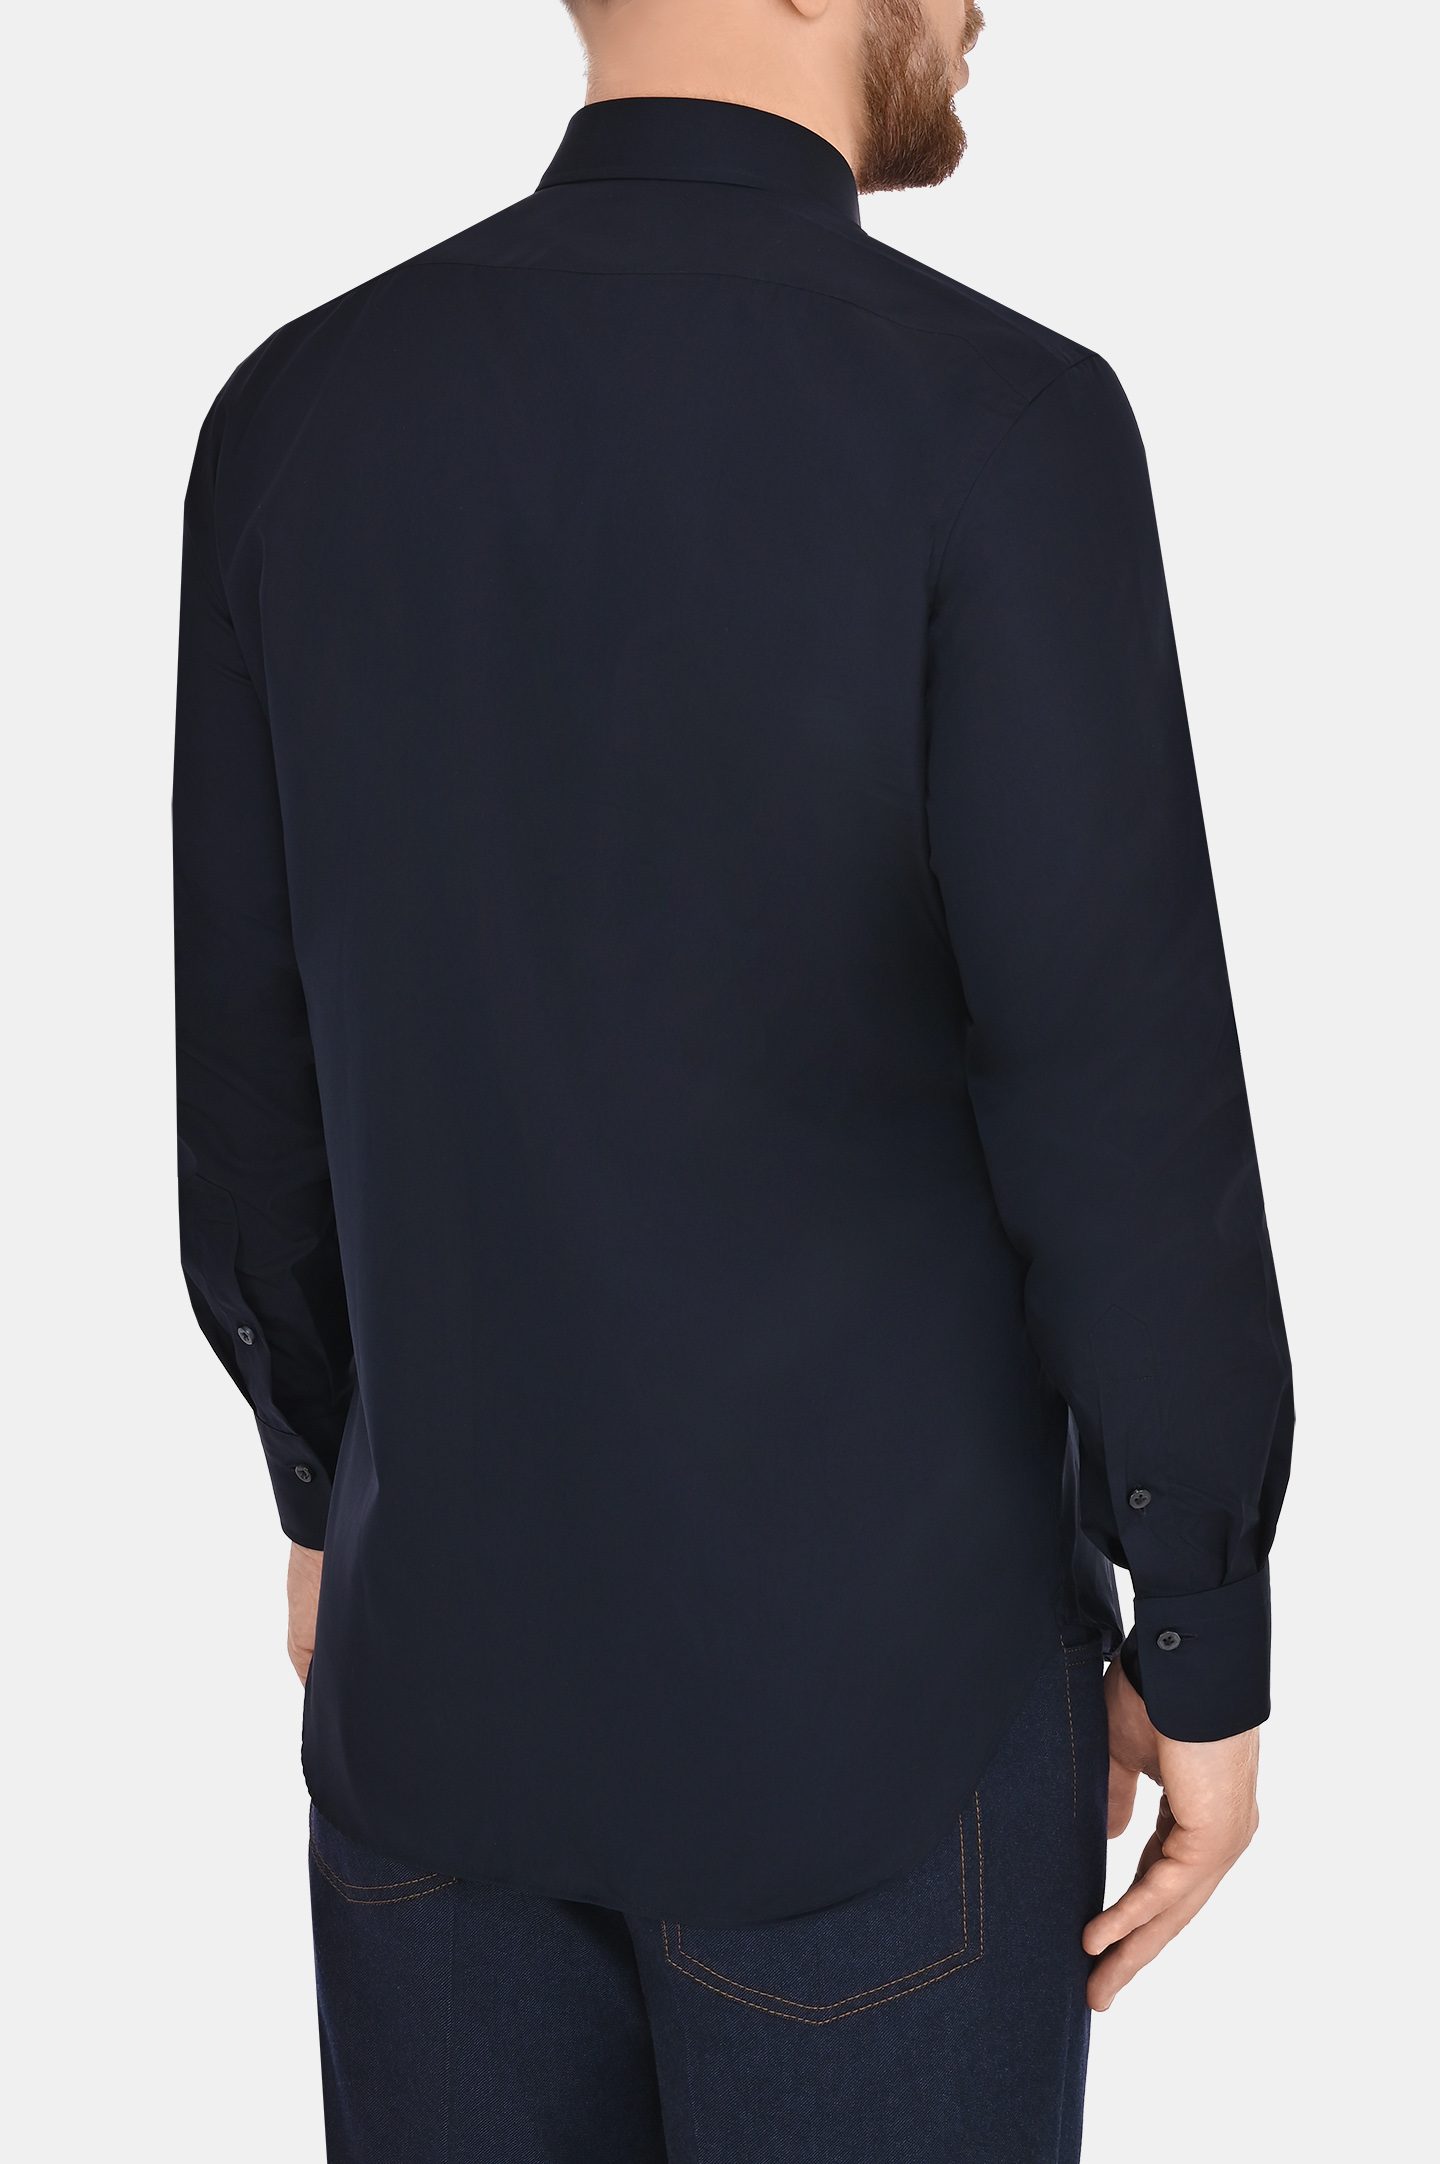 Рубашка CASTANGIA N-SIC66B 14645/019, цвет: Синий, Мужской